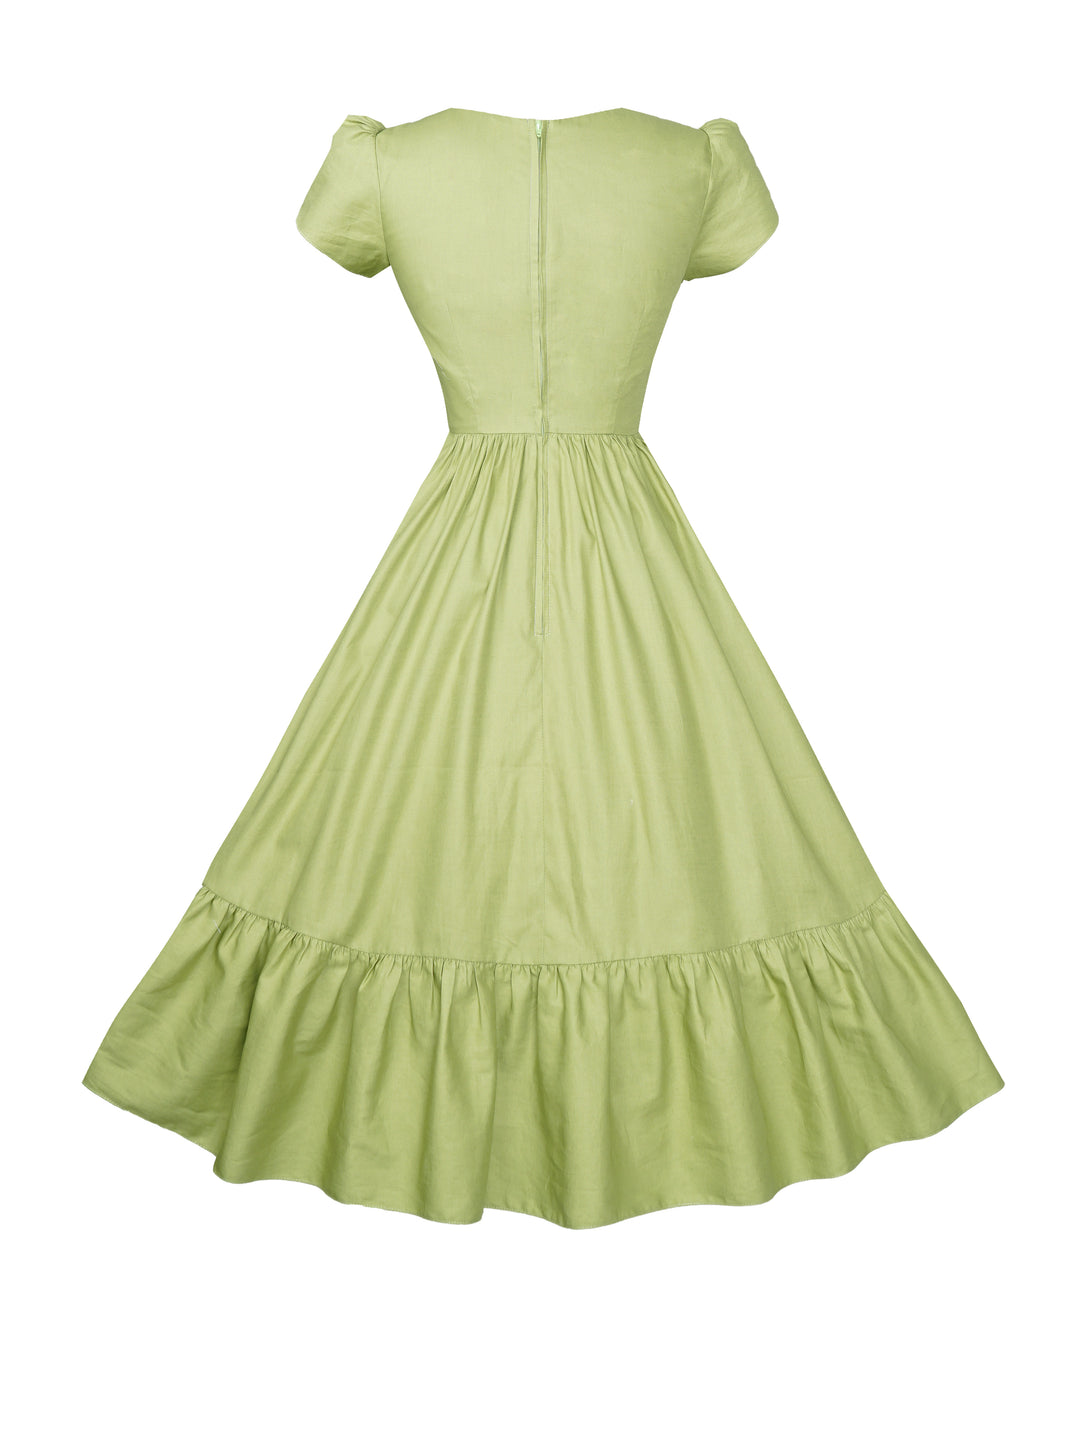 MTO - Ava Dress in Matcha Green Cotton